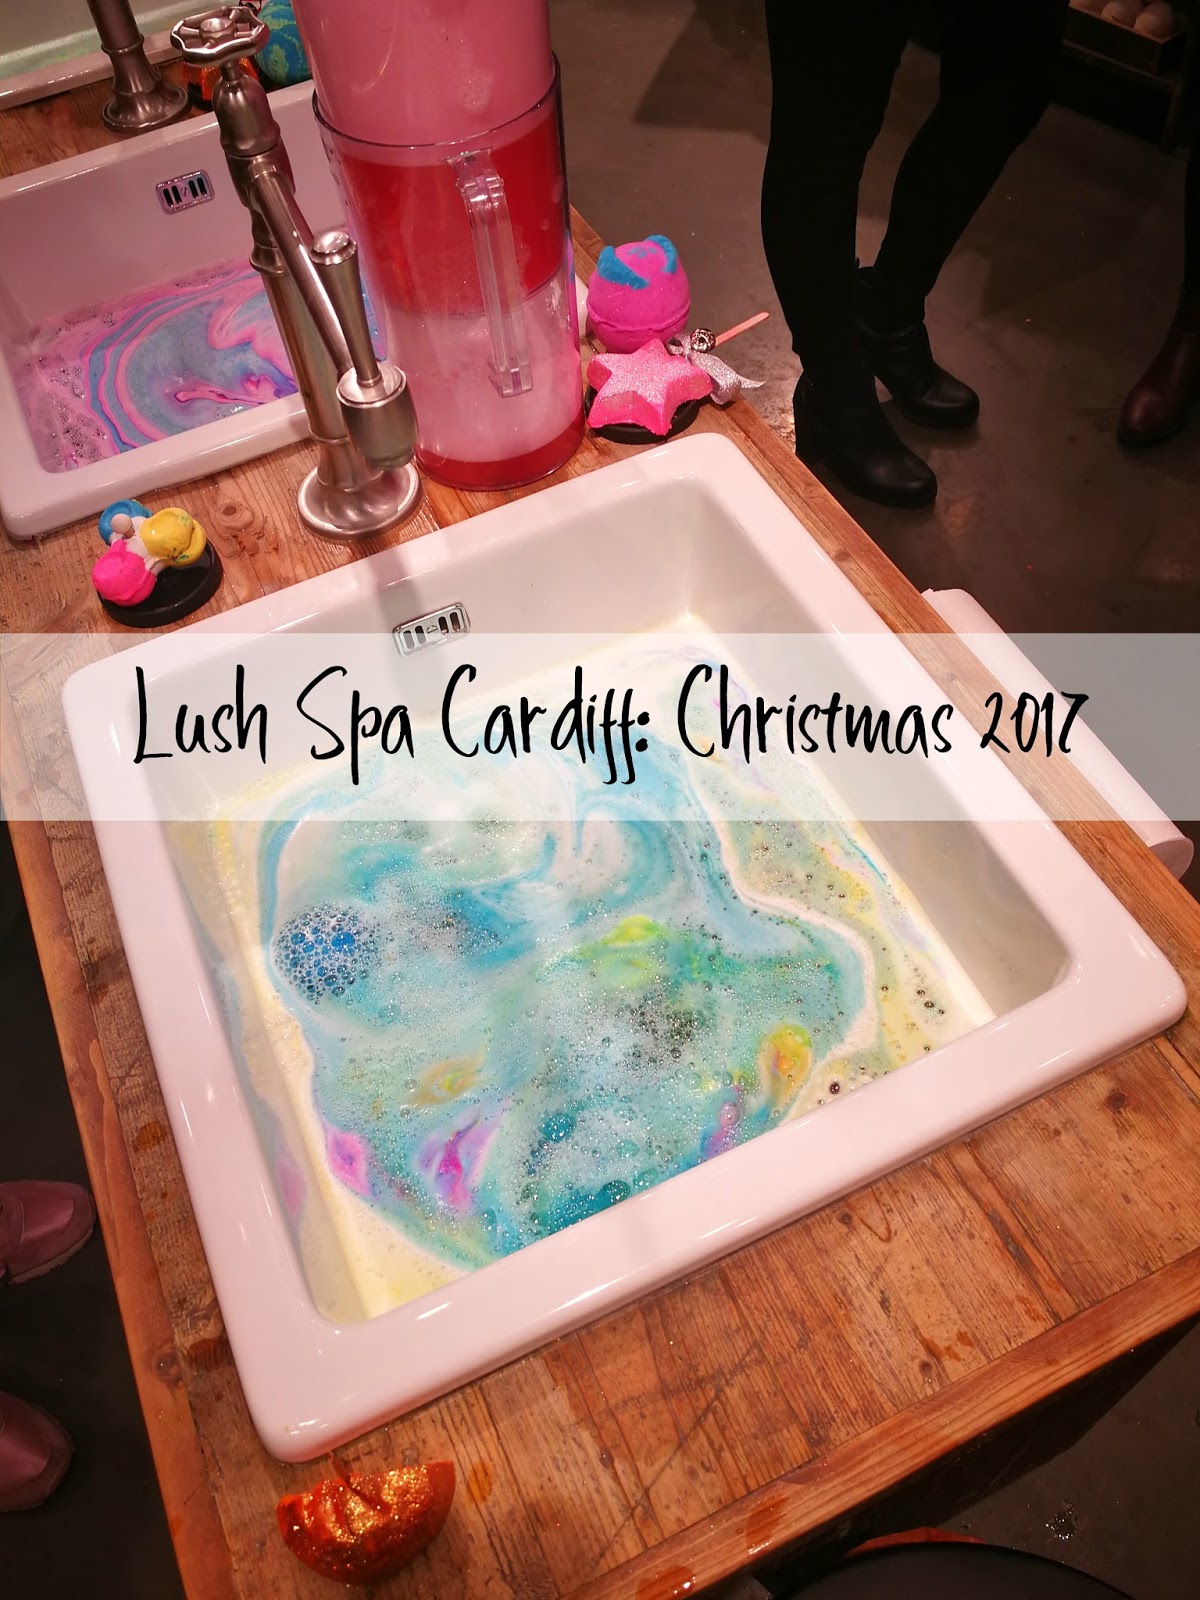 Lush Spa Cardiff: Christmas 2017